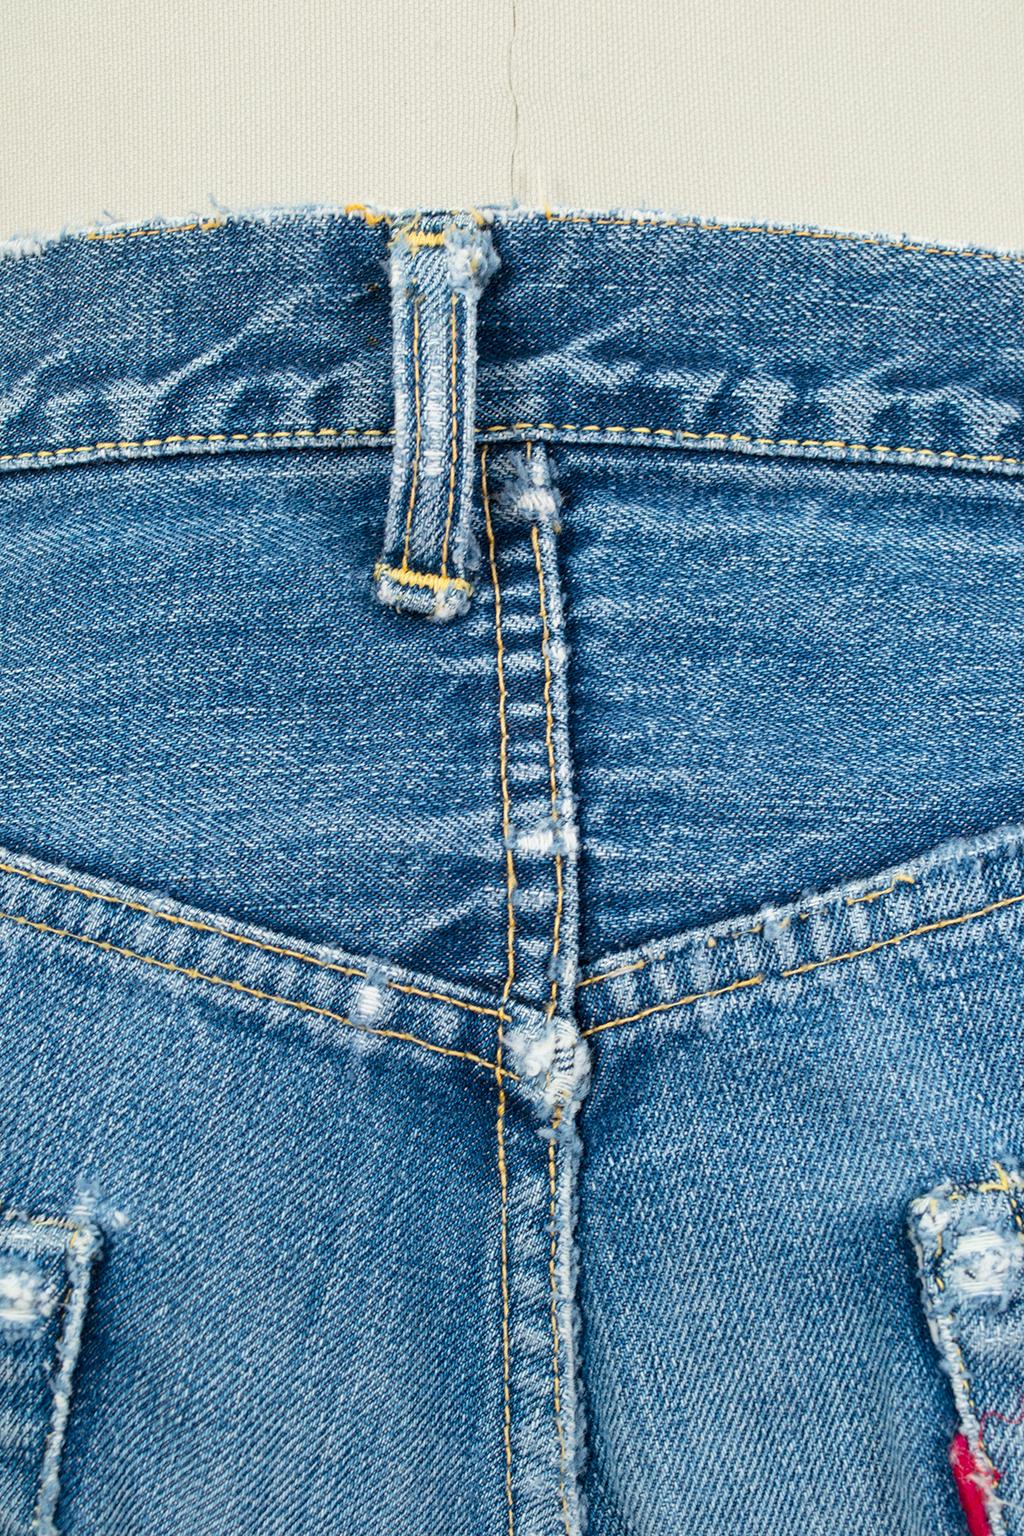 Men's Levi Strauss 501XX Denim Jeans with Hidden Rivets – size 32 x 38, 1962-64 4